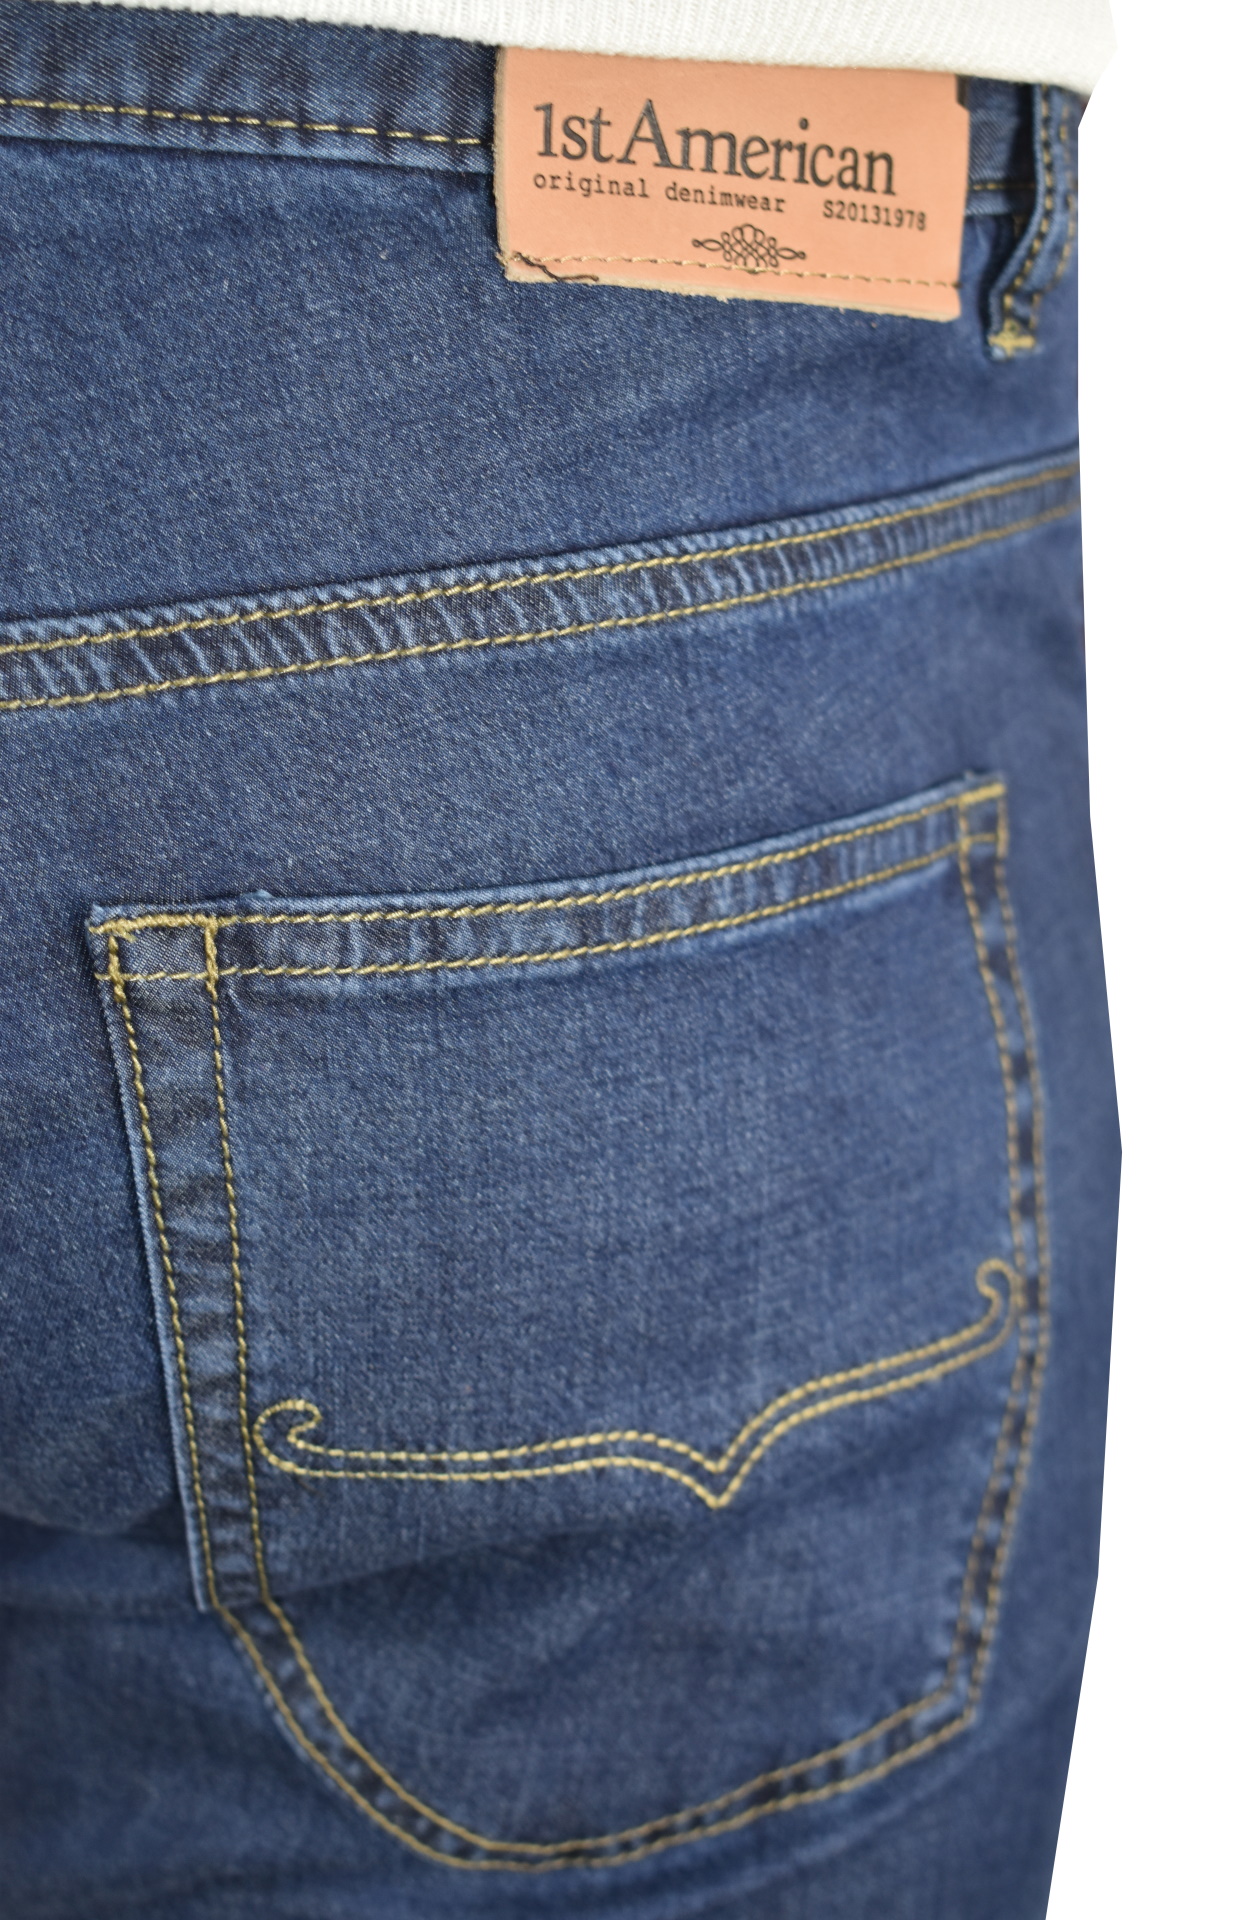 SOLIGO JEANS UOMO 5 TASCHE BLU DENIM 3 1st american jeans fashion uomo 5 tasche colore denim blu - 99% cotton 1% elastan denim 10oz